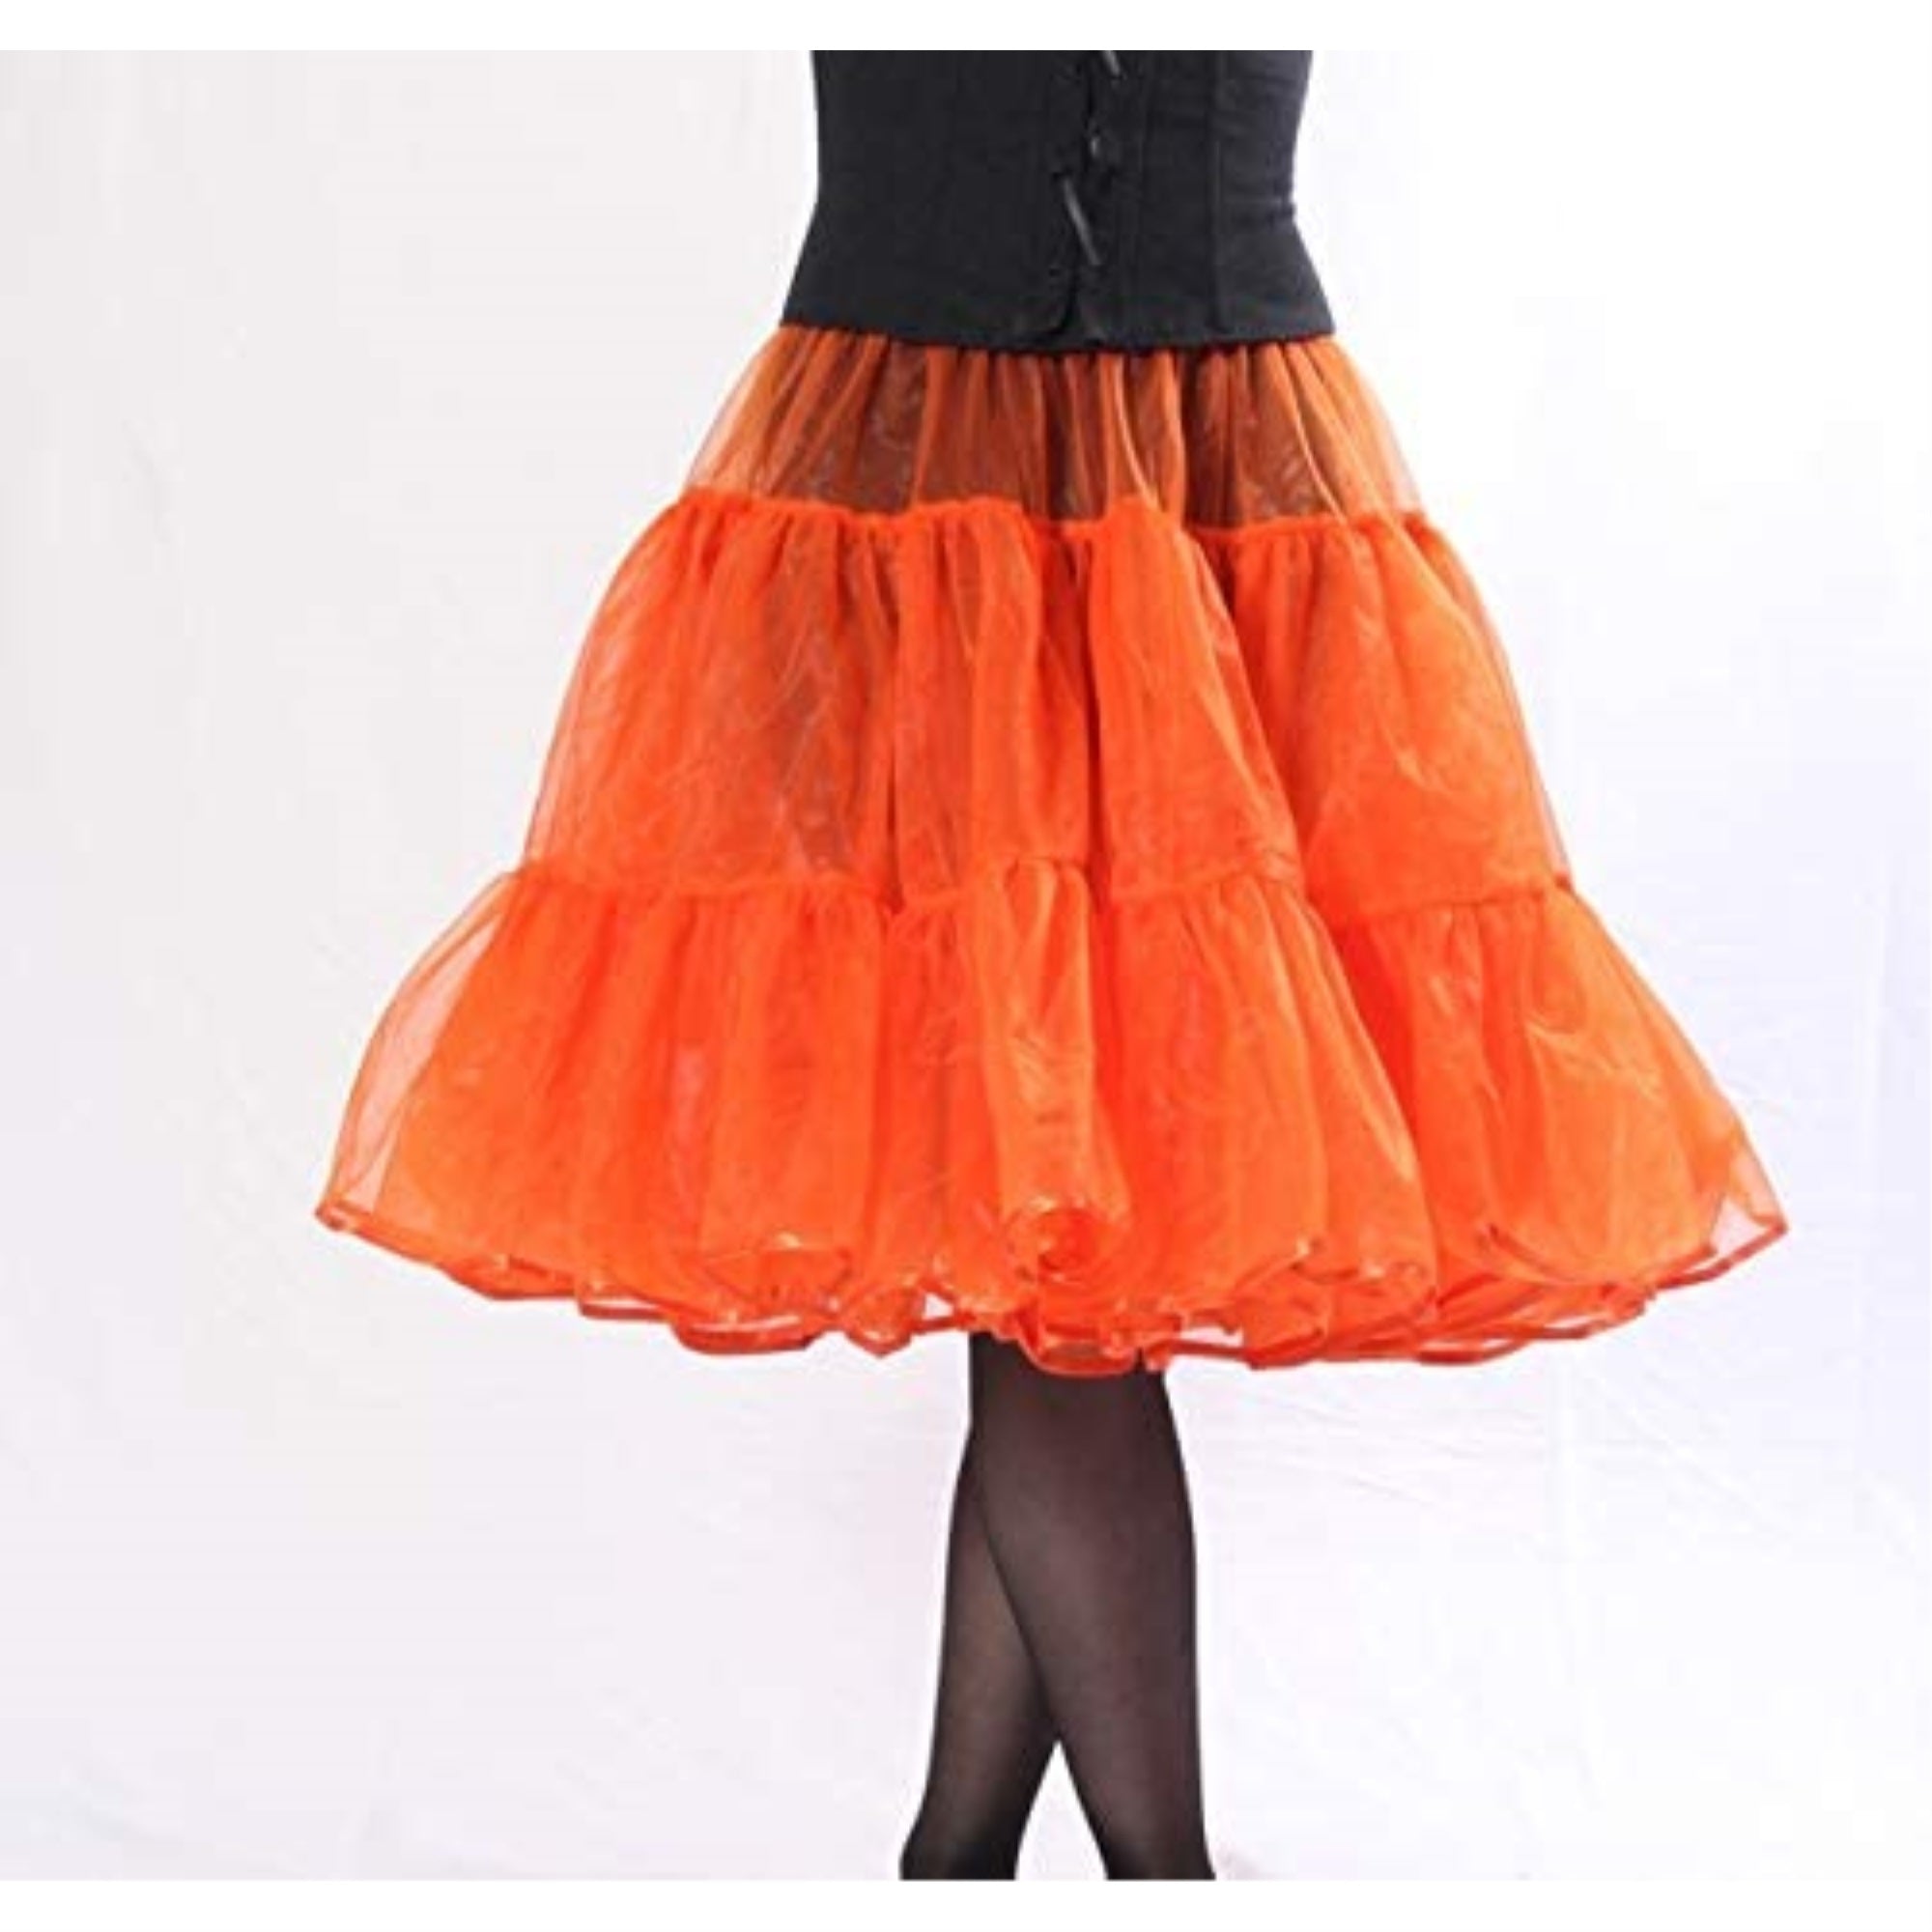 416 Woman Sexy Knee length Petticoat for Halloween-Orange